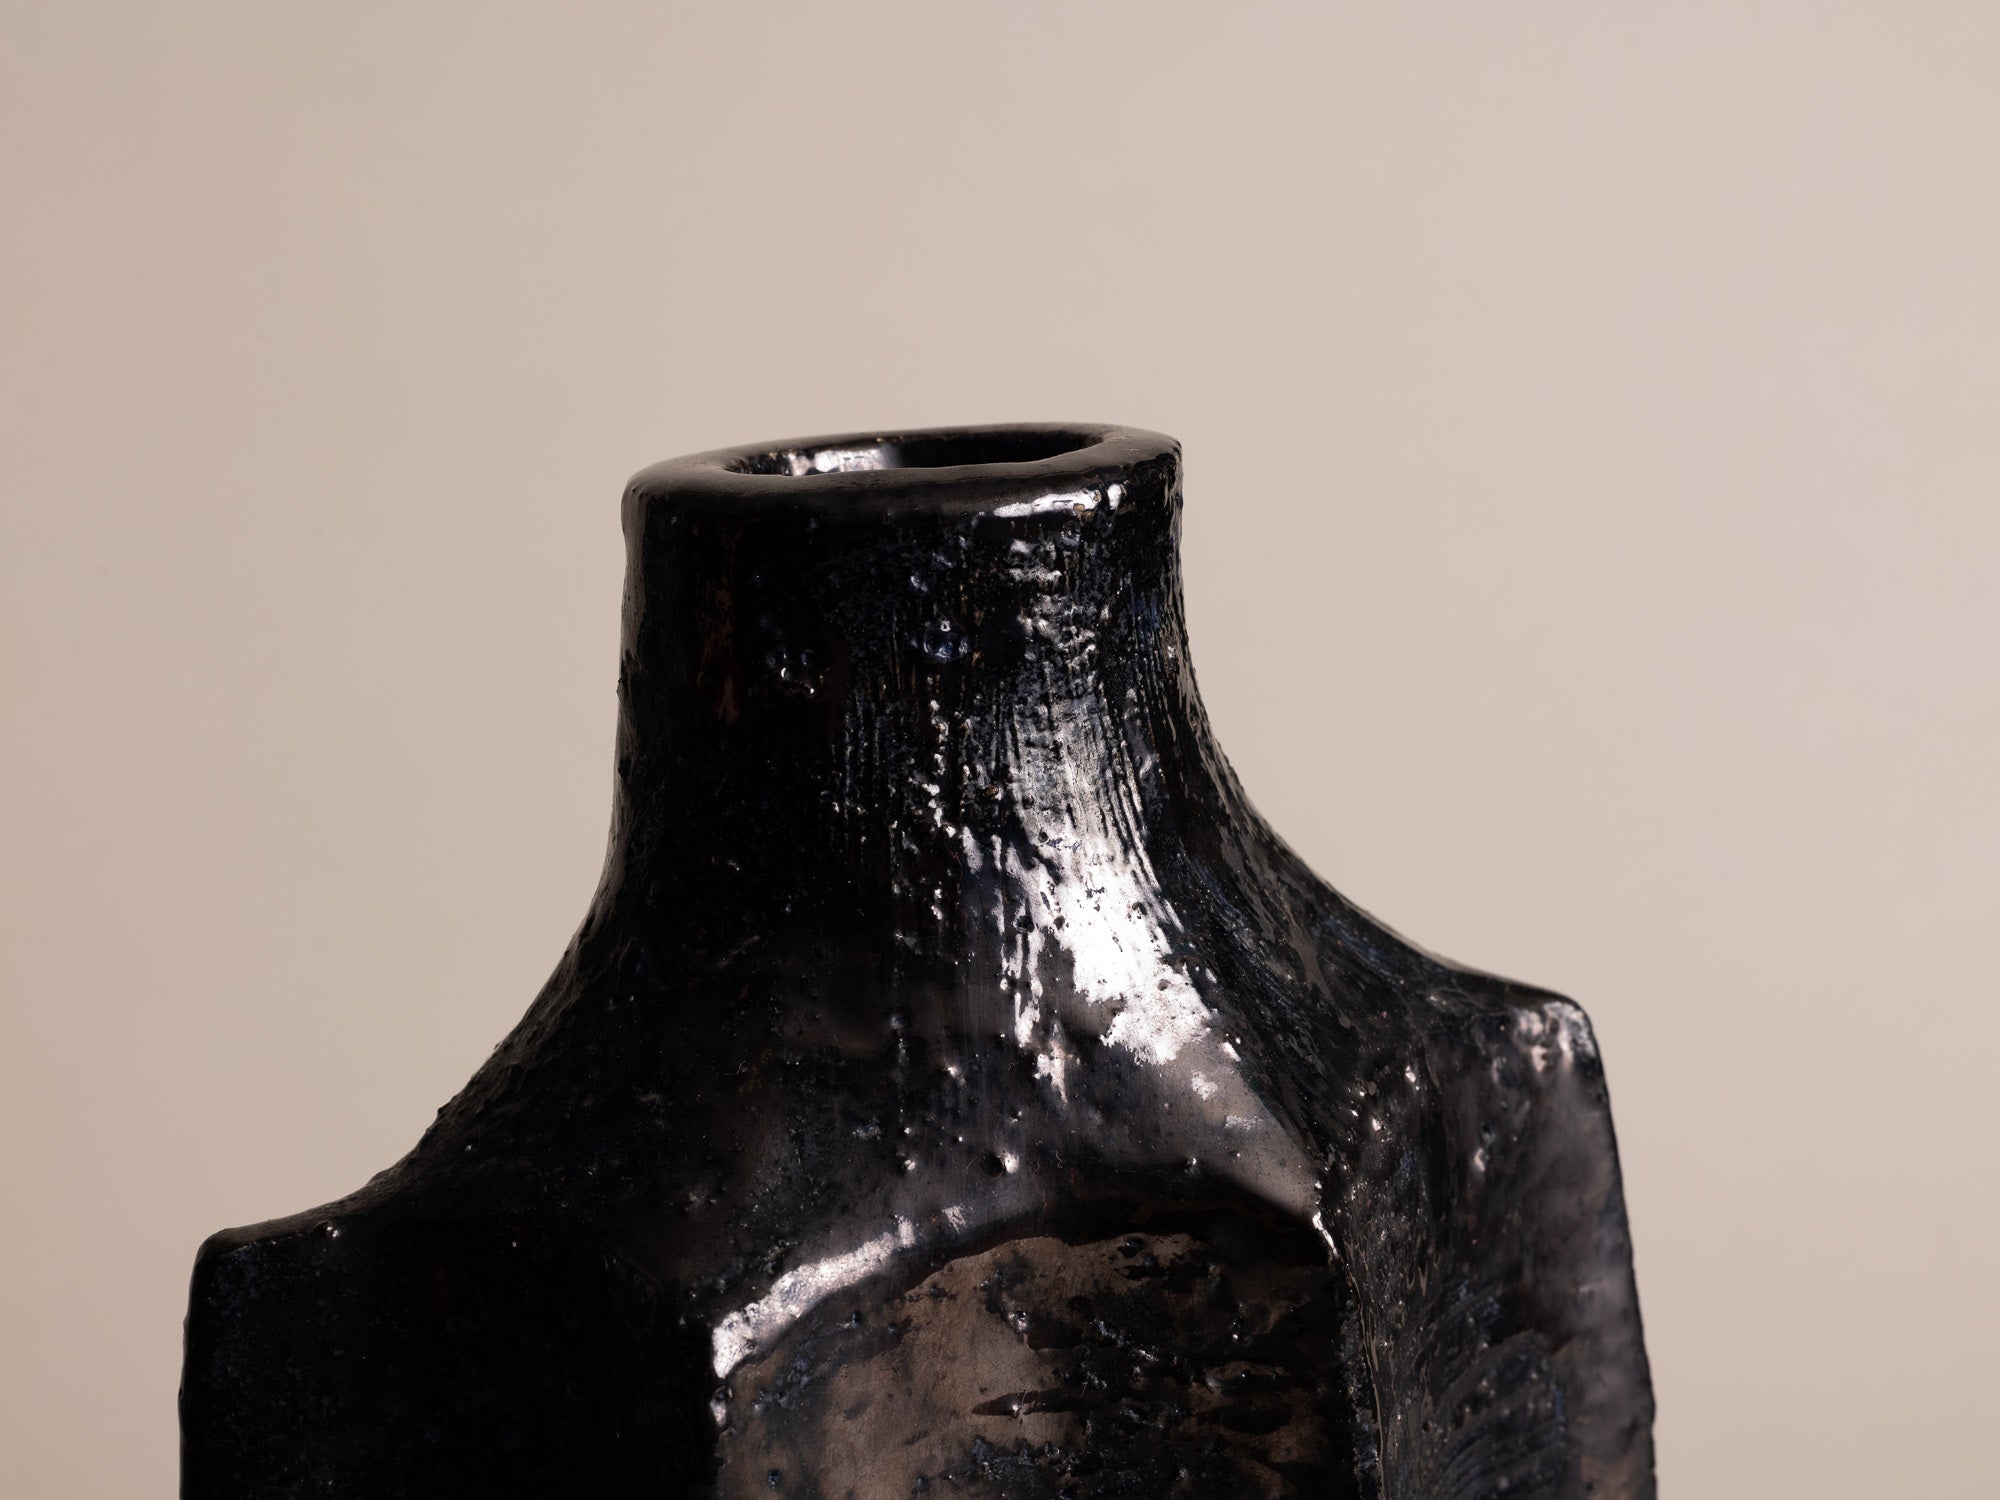 Rare vase de forme libre de Raymond Louis Quillivic, France (vers 1970) - Collection Serullaz..Huge freeform vase by Raymond Louis Quillivic, France (circa 1970) - Collection Serullaz